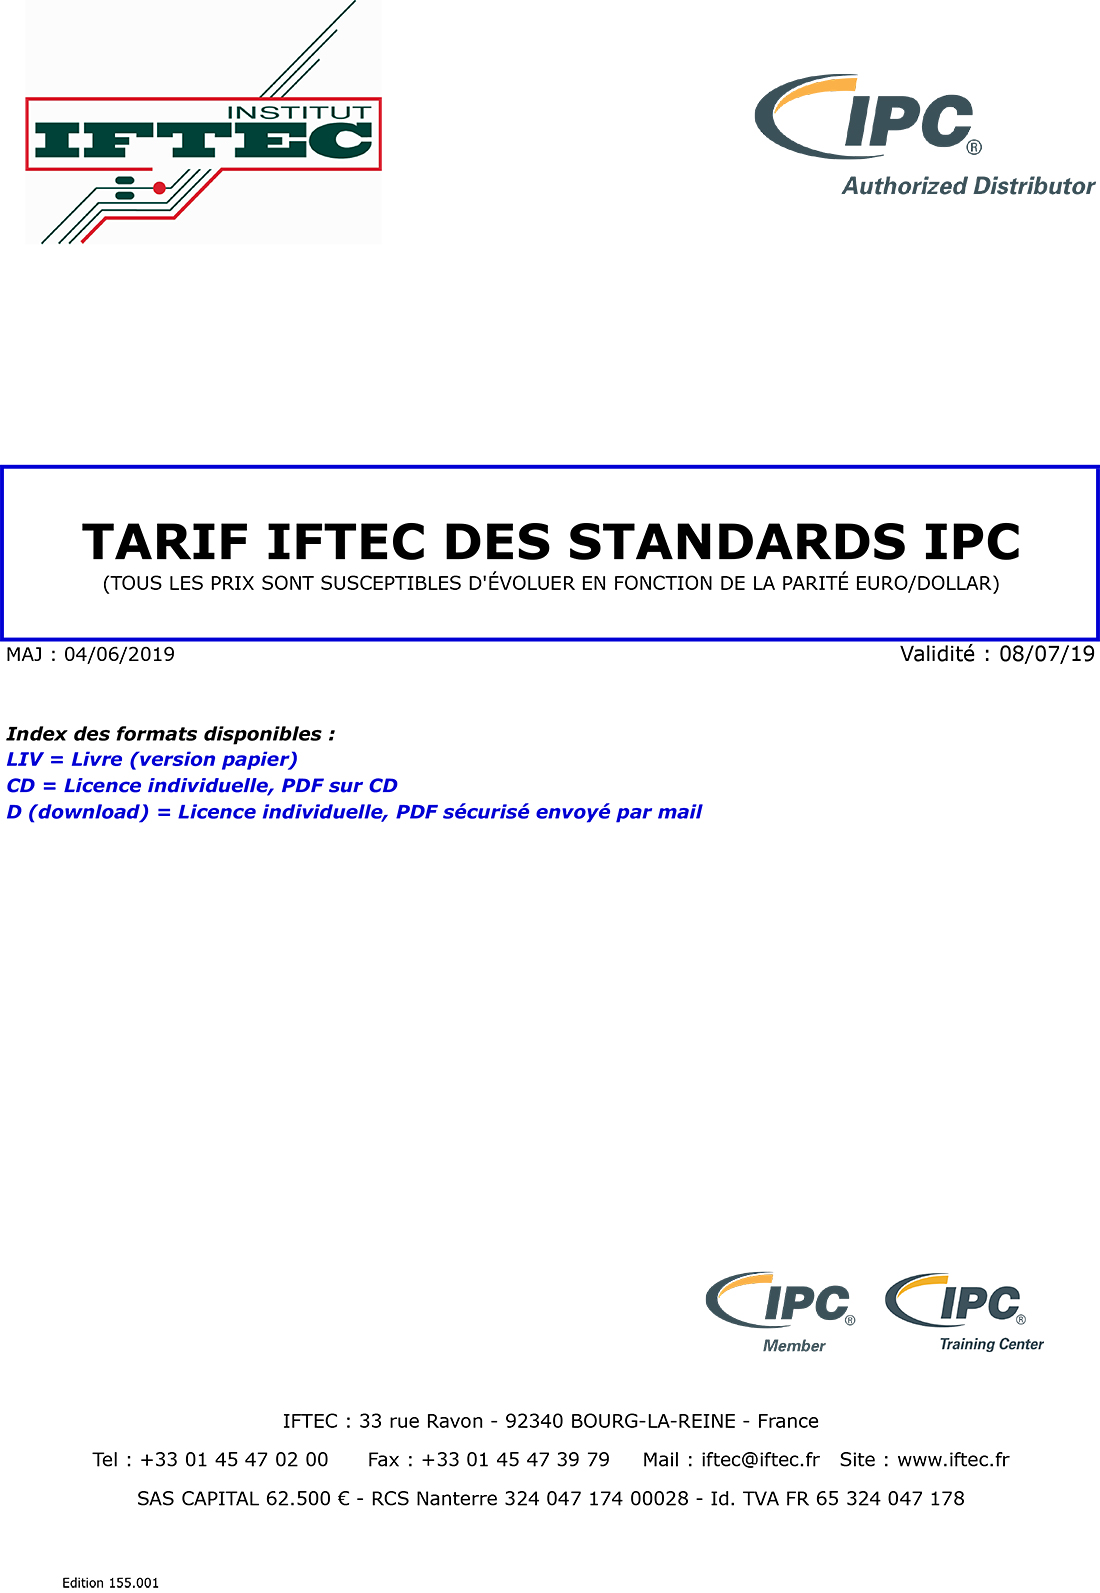 TARIF-CLIENTS-IPC-4-juin-au-8-juill-2019-1